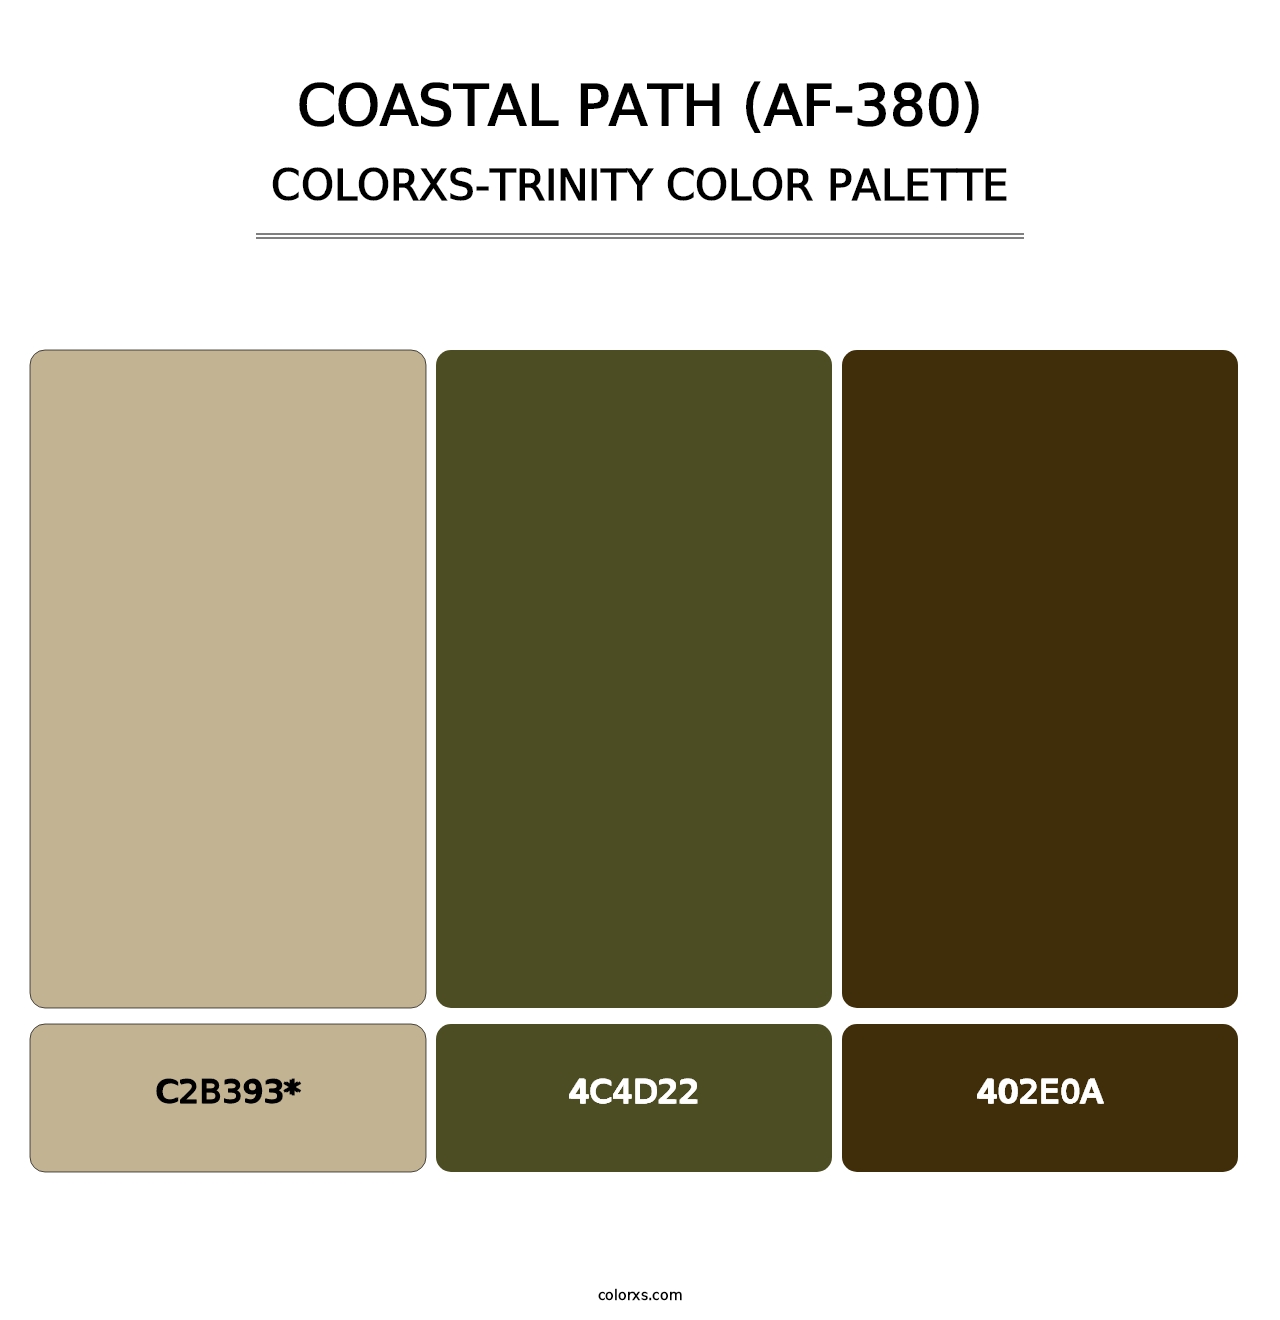 Coastal Path (AF-380) - Colorxs Trinity Palette